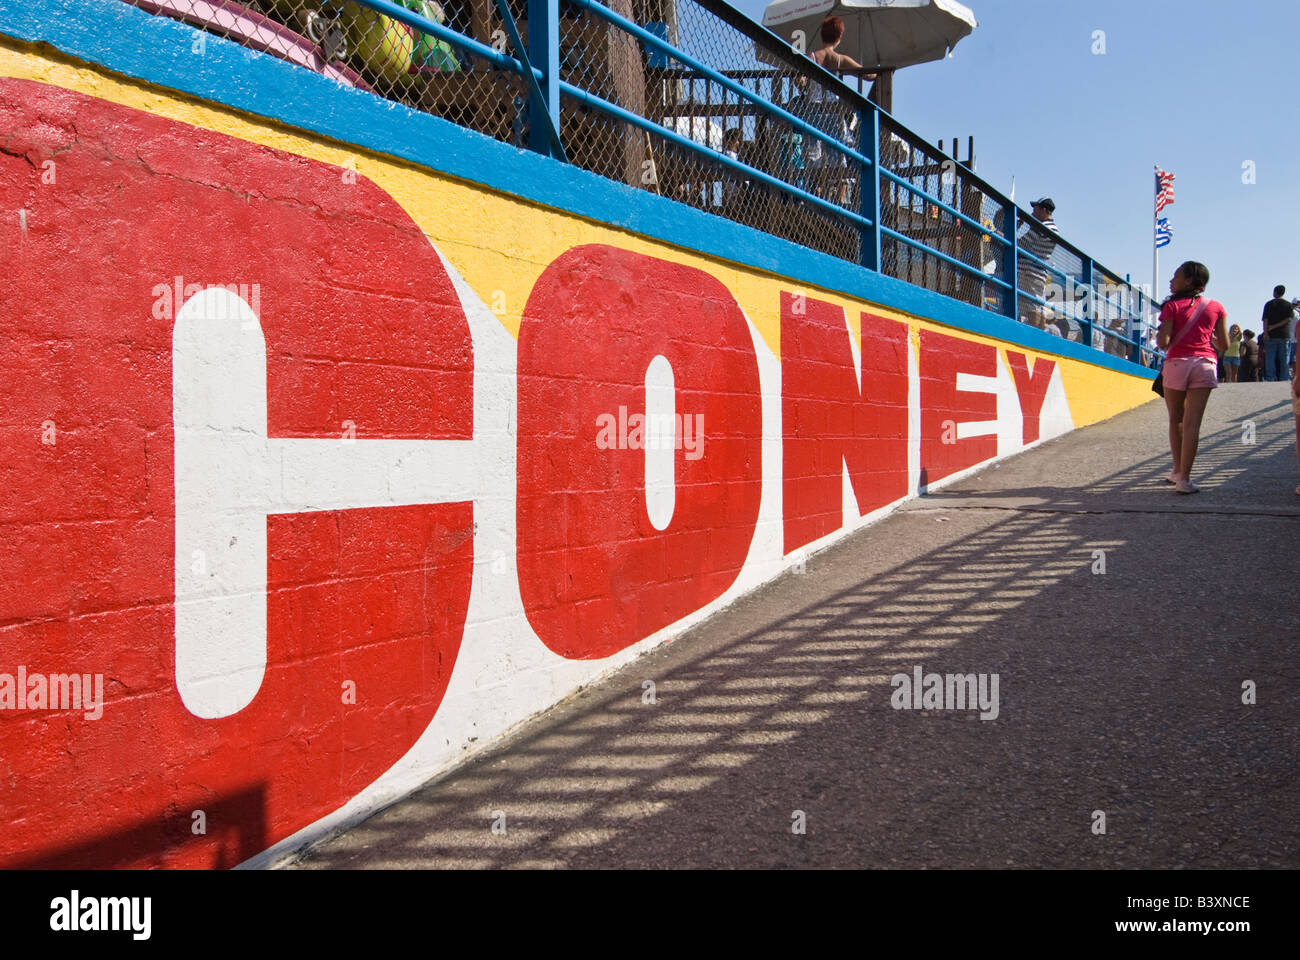 Entrance Ramp to the Coney Island boardwalk in Brooklyn New York City Stock Photo